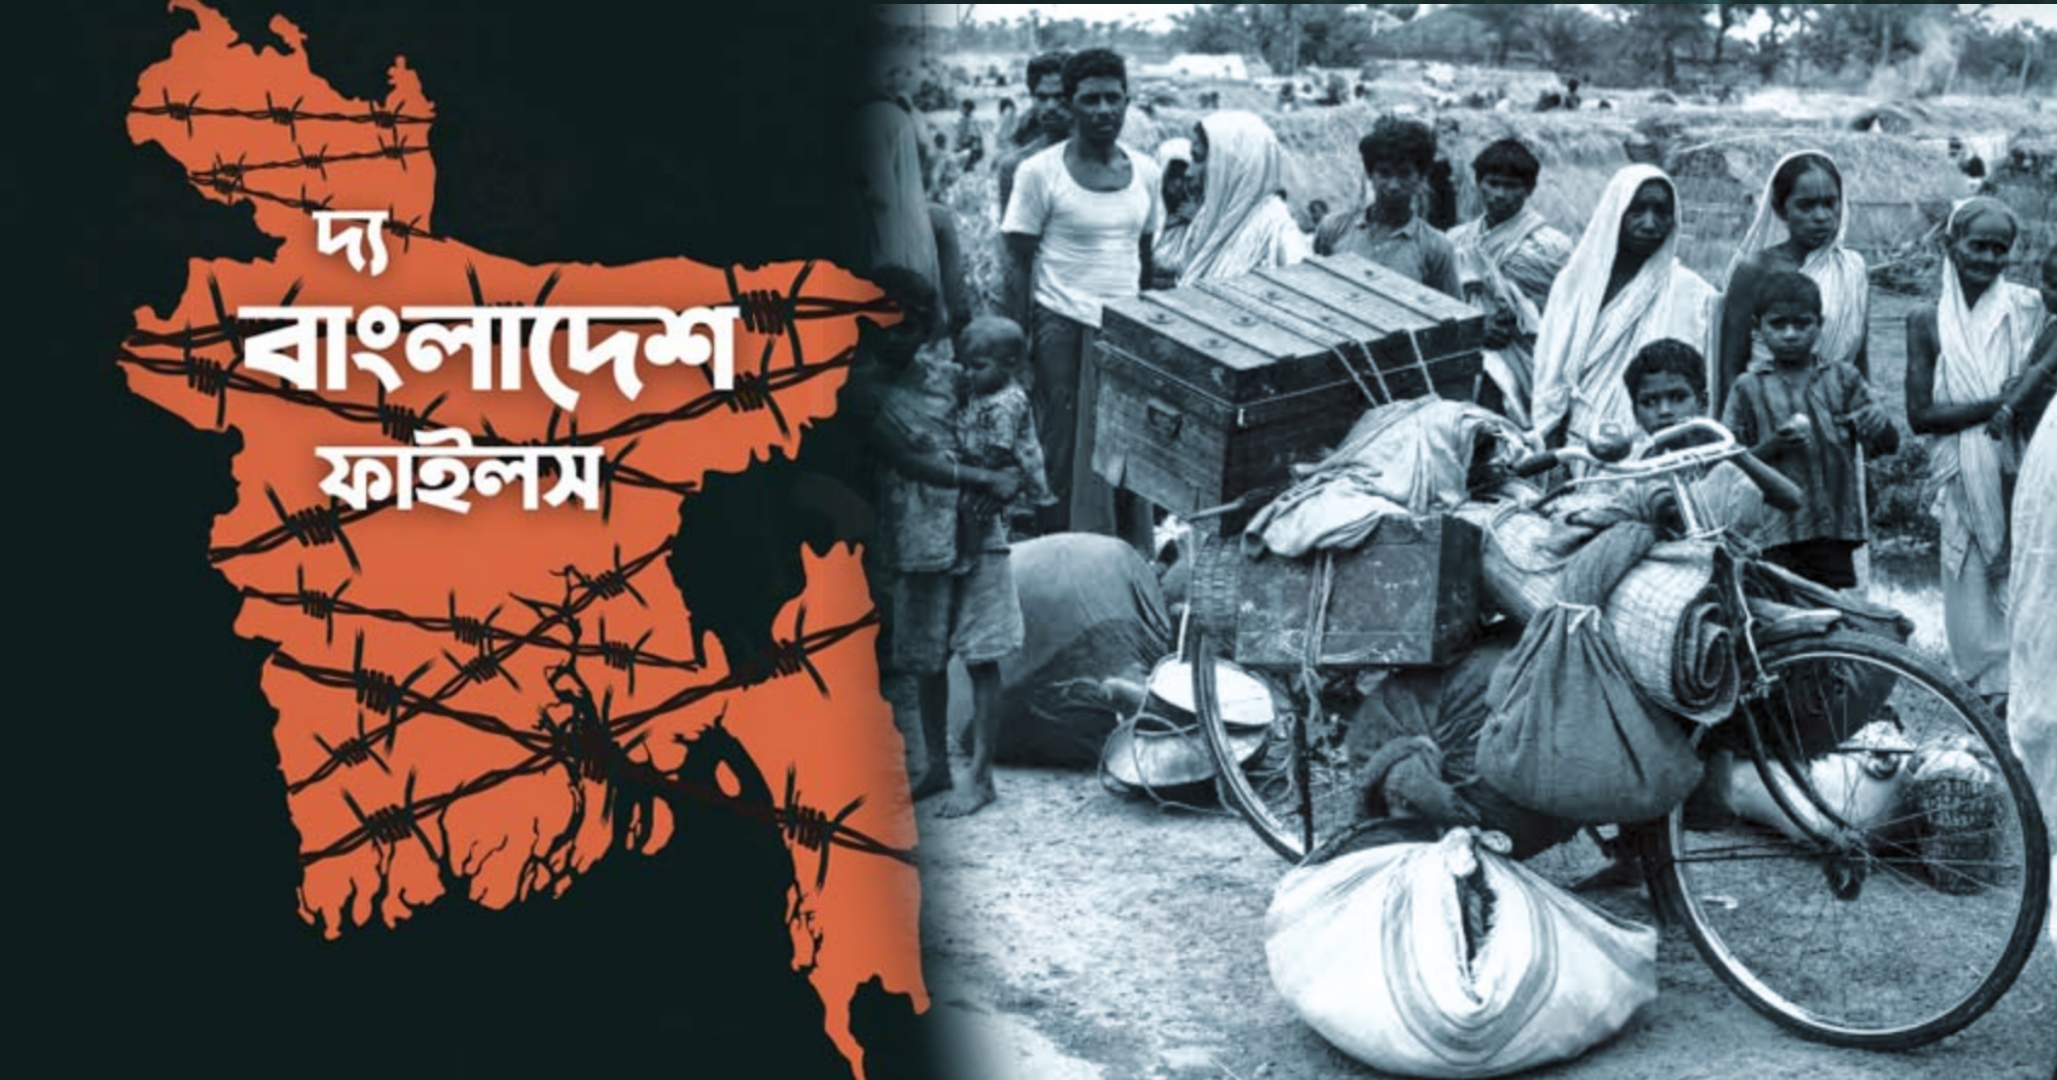 The Bangladesh Files